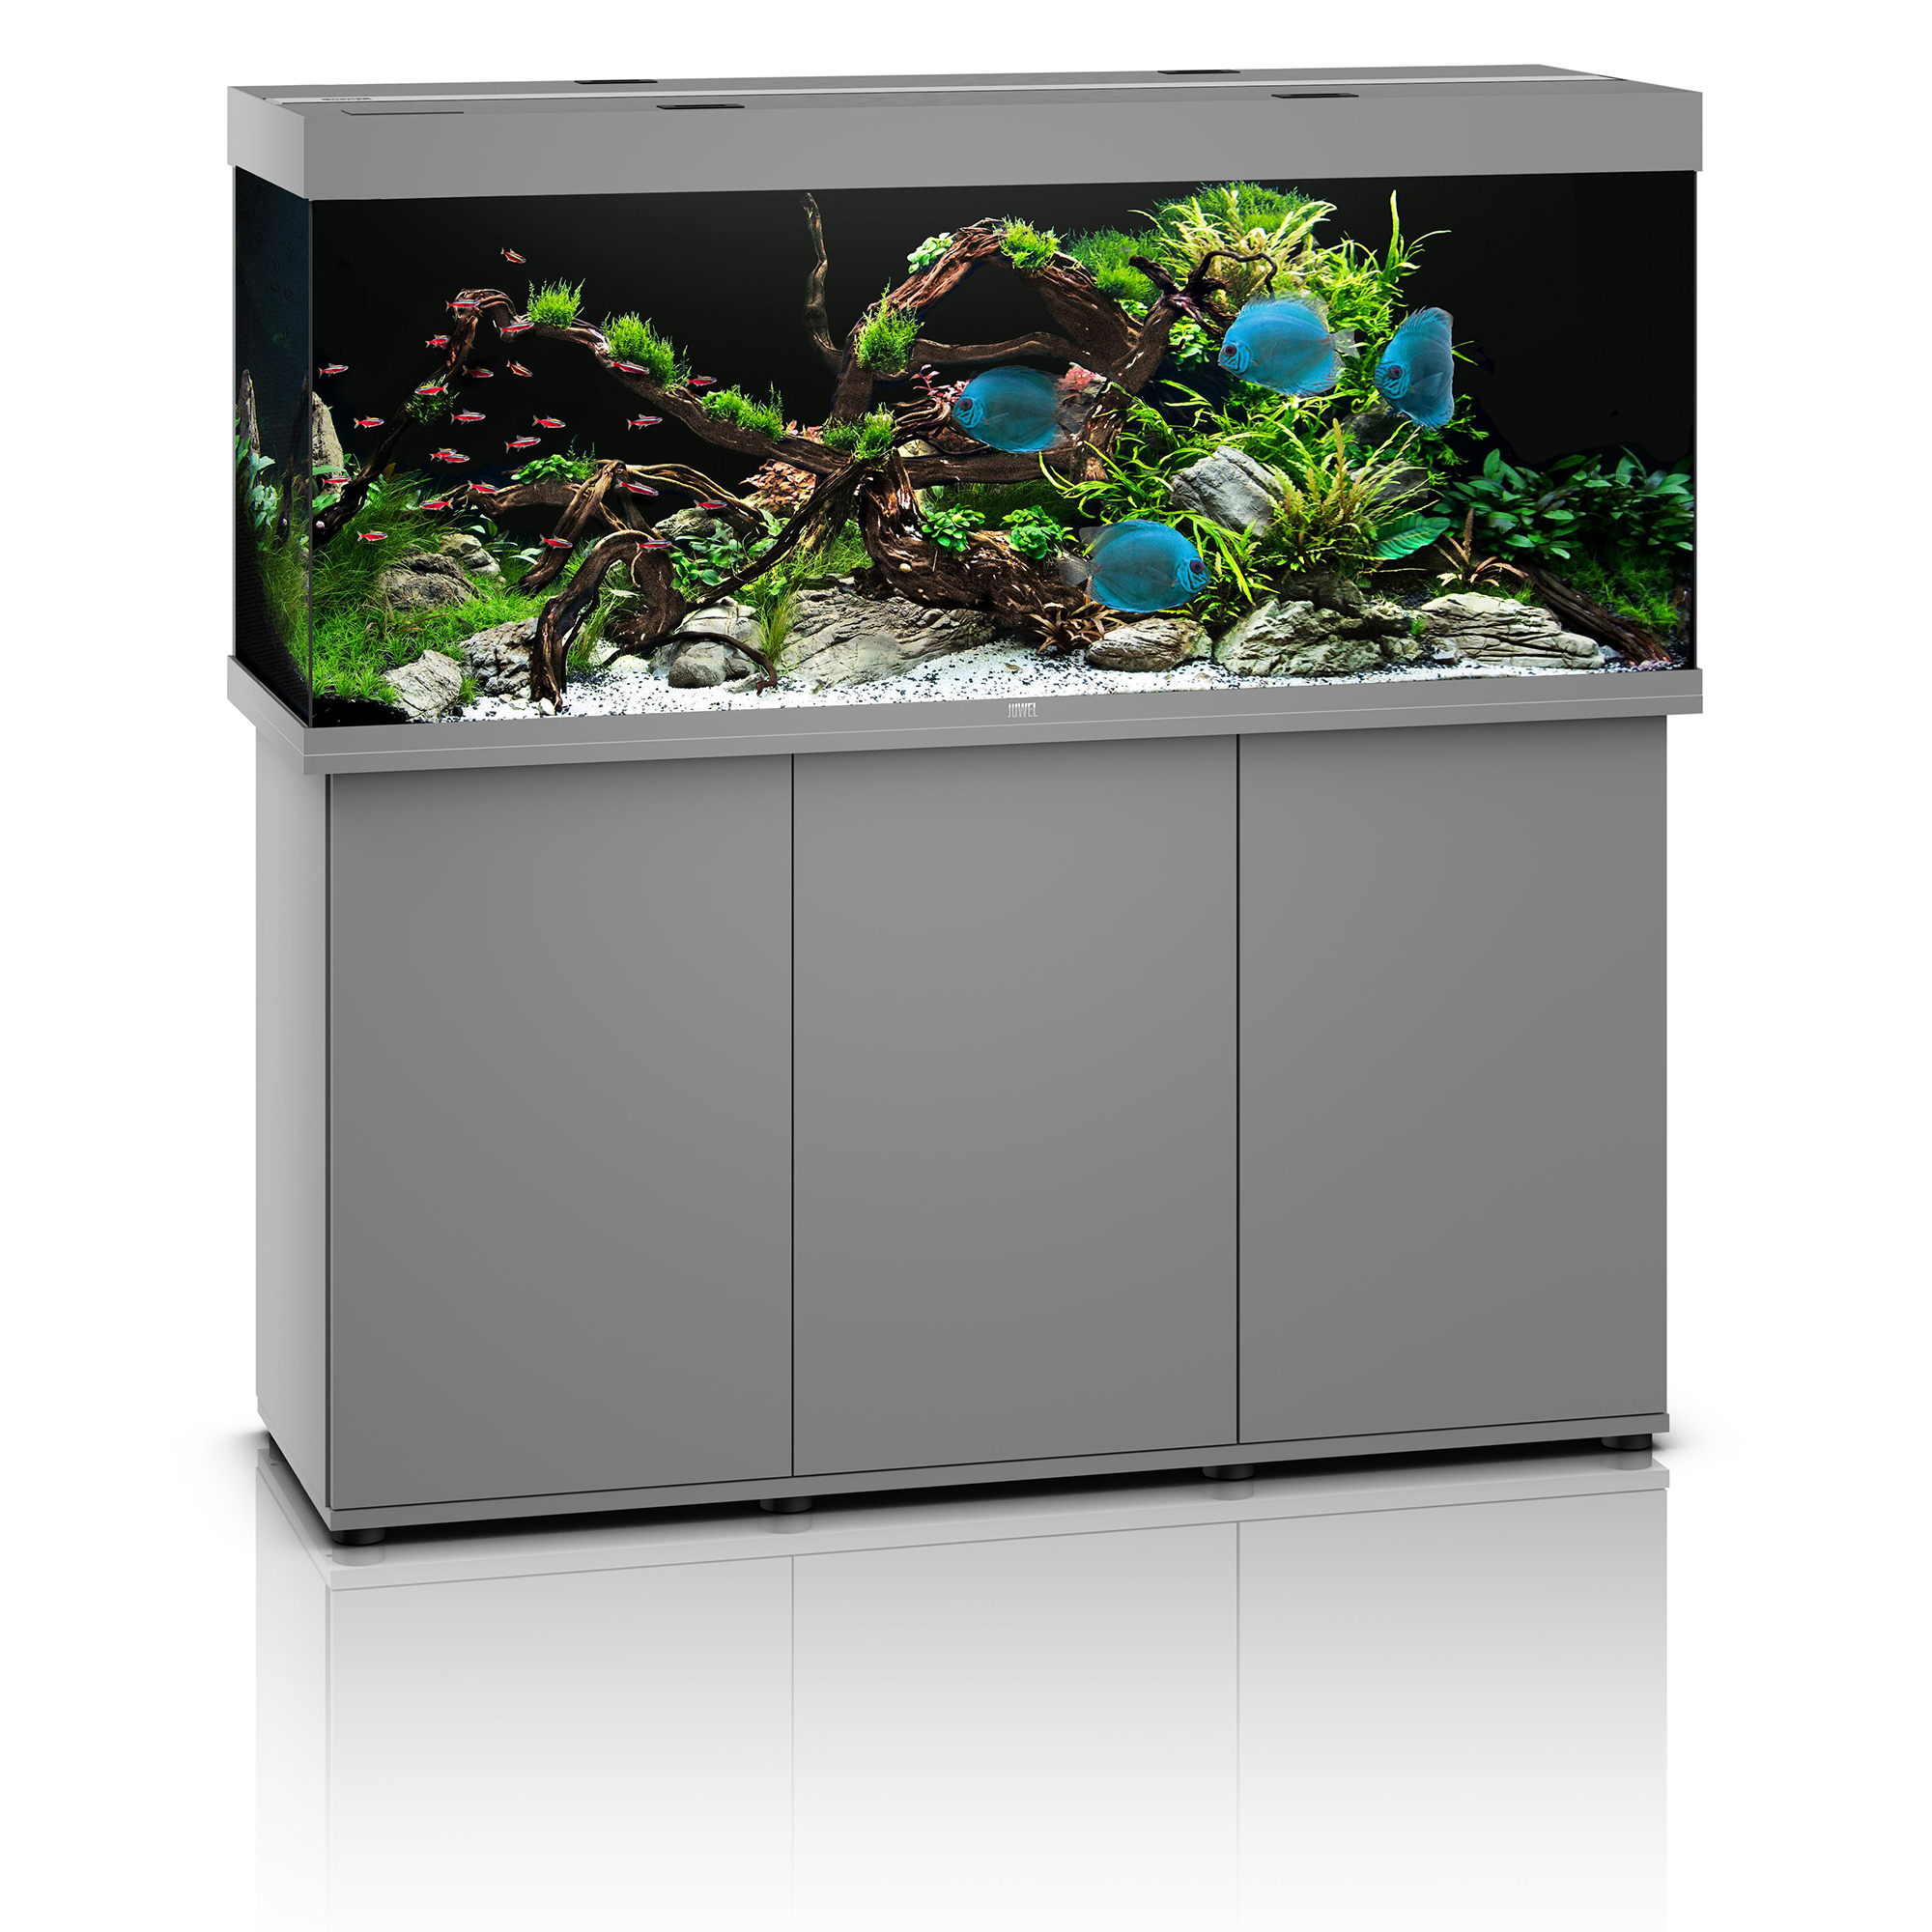 Juwel Rio 450 LED Aquarium And Cabinet (Black)